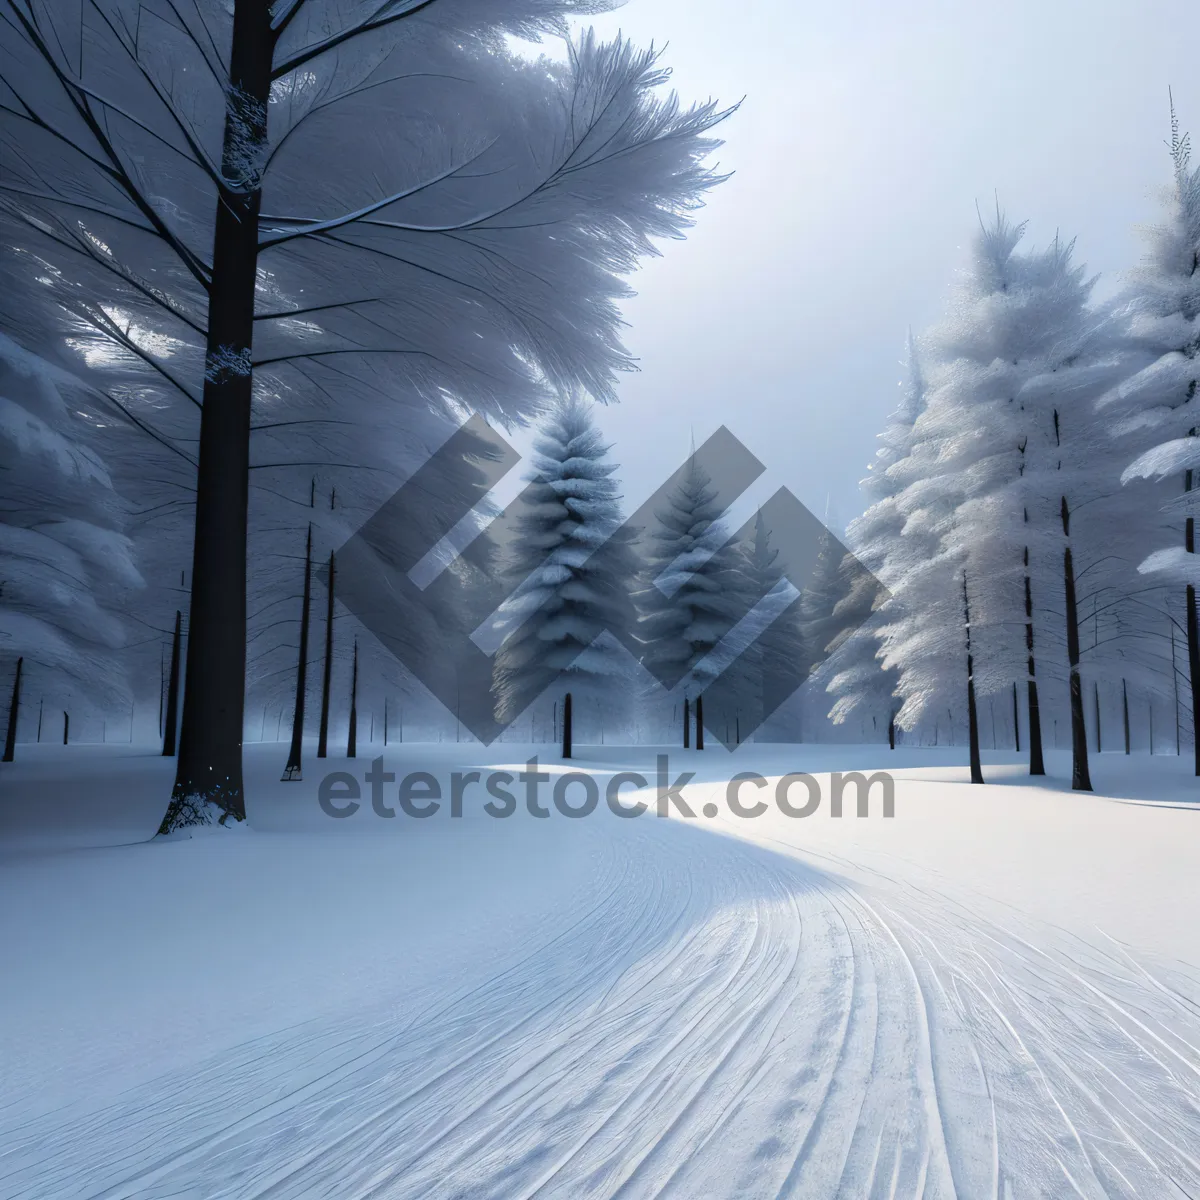 Picture of Winter Wonderland